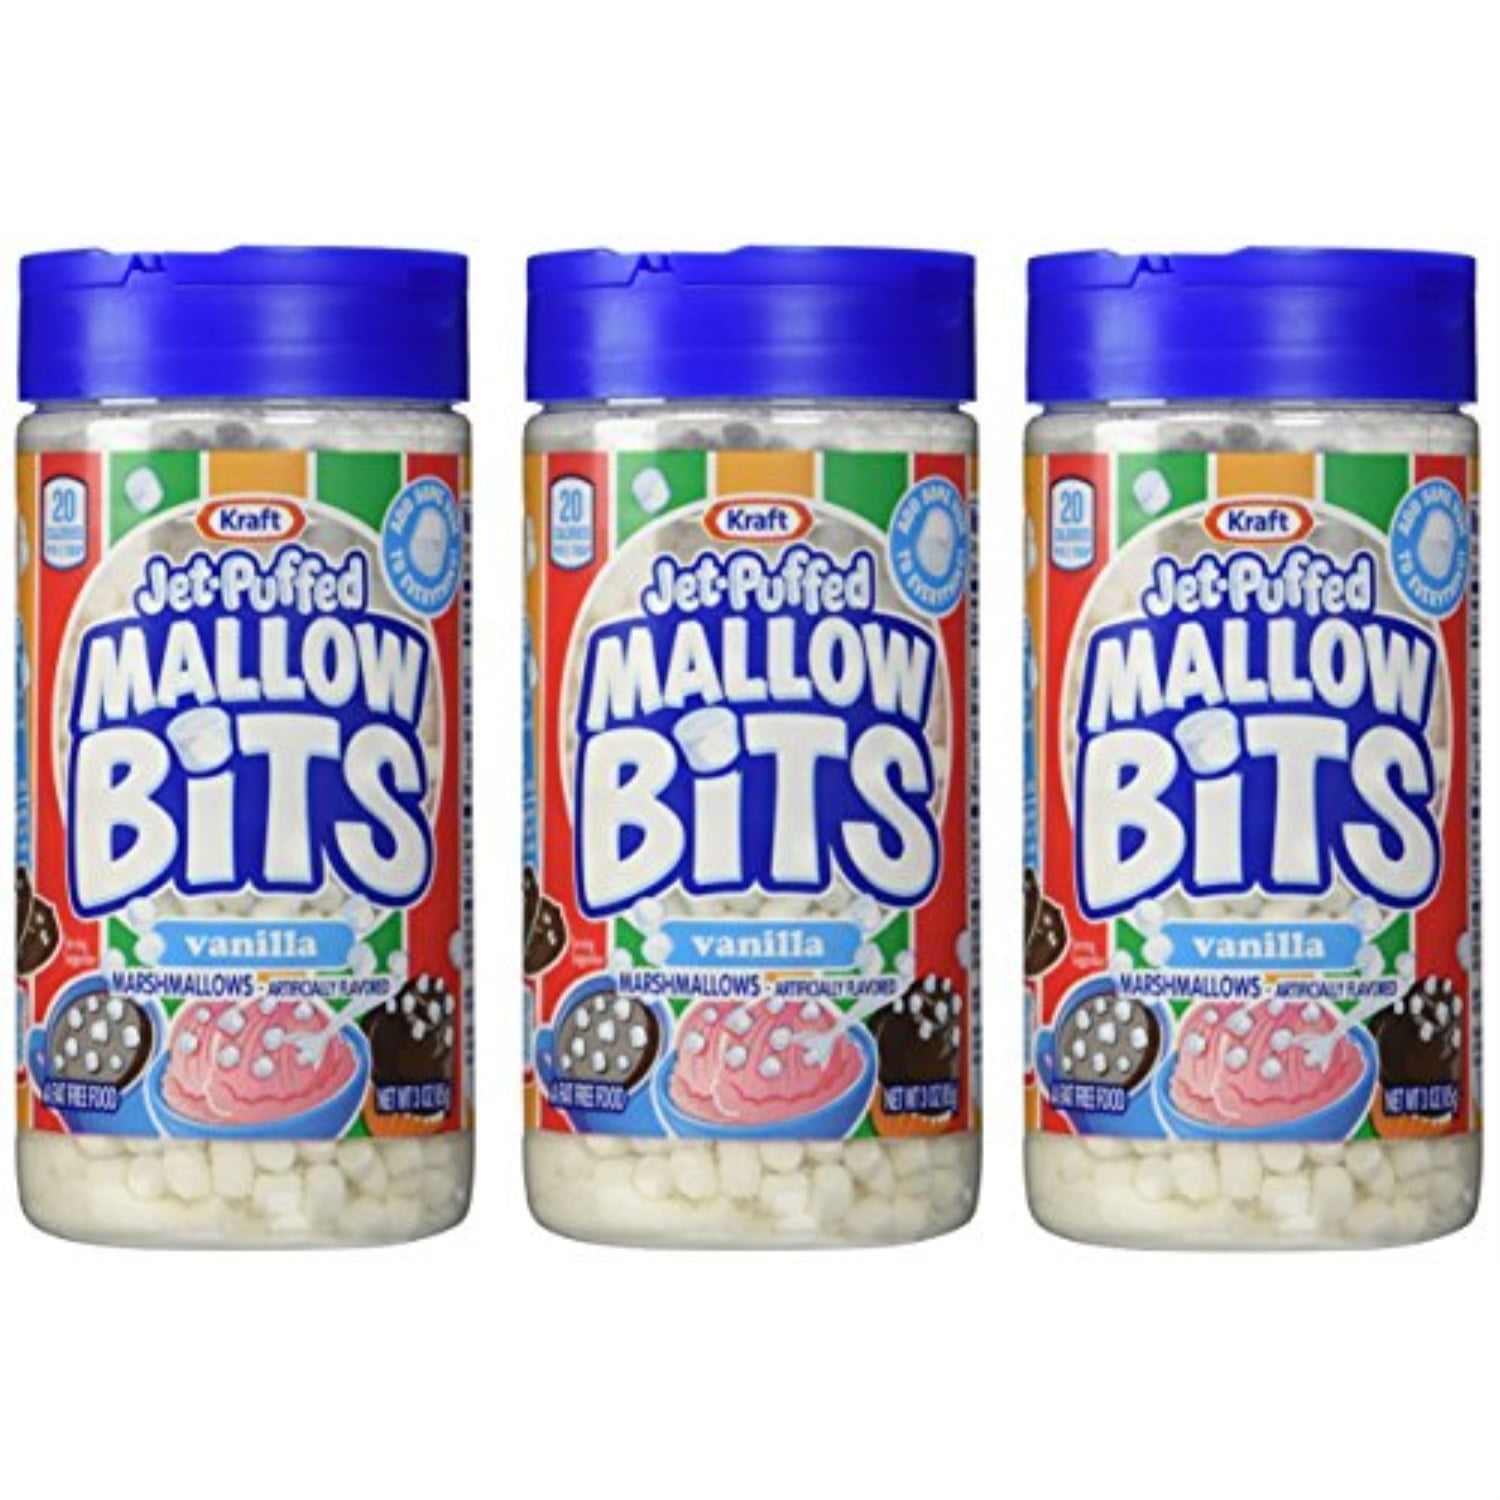 marshmallow bits foodservice